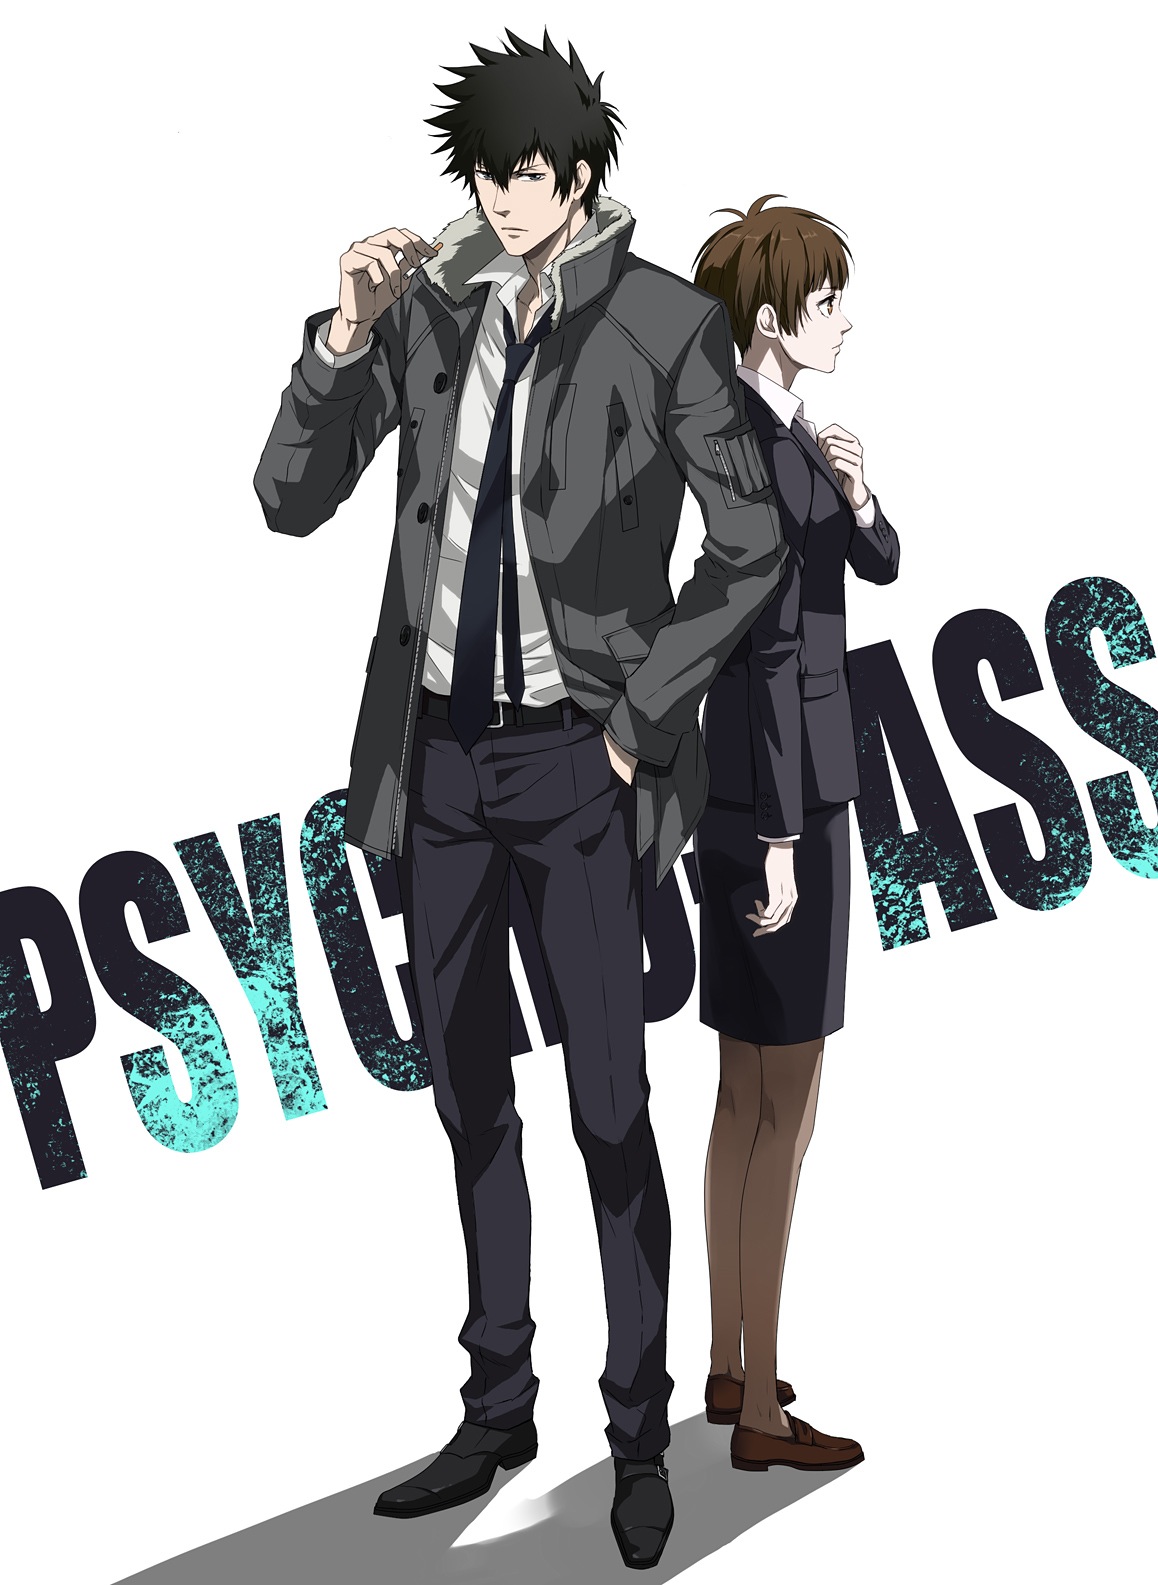 "Psycho-Pass"